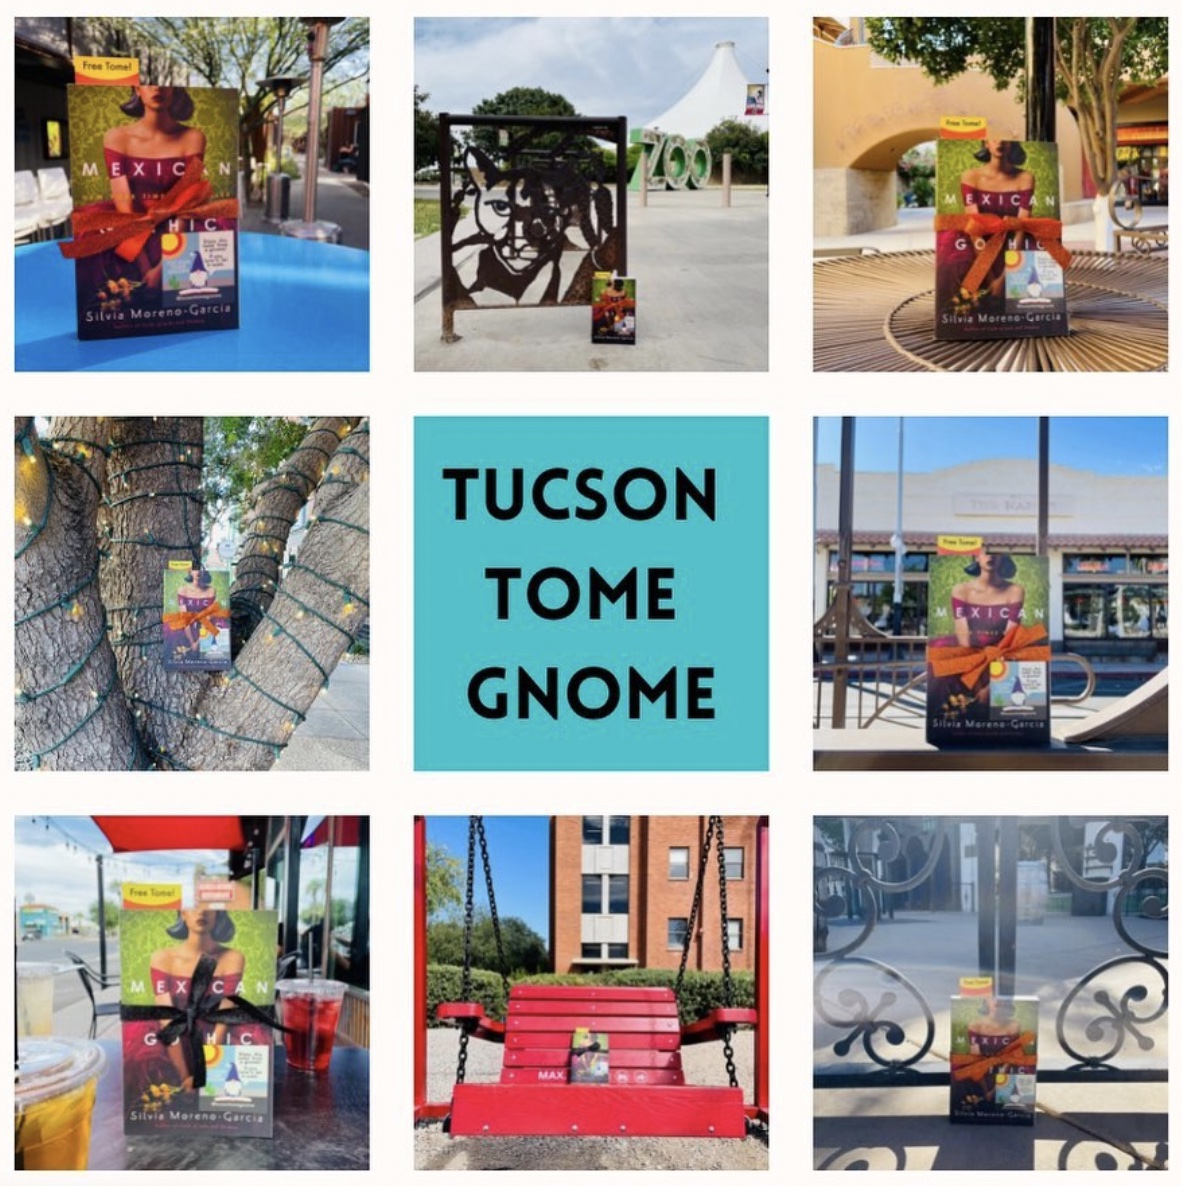 Tucson Tome Gnome hiding places around Tucson